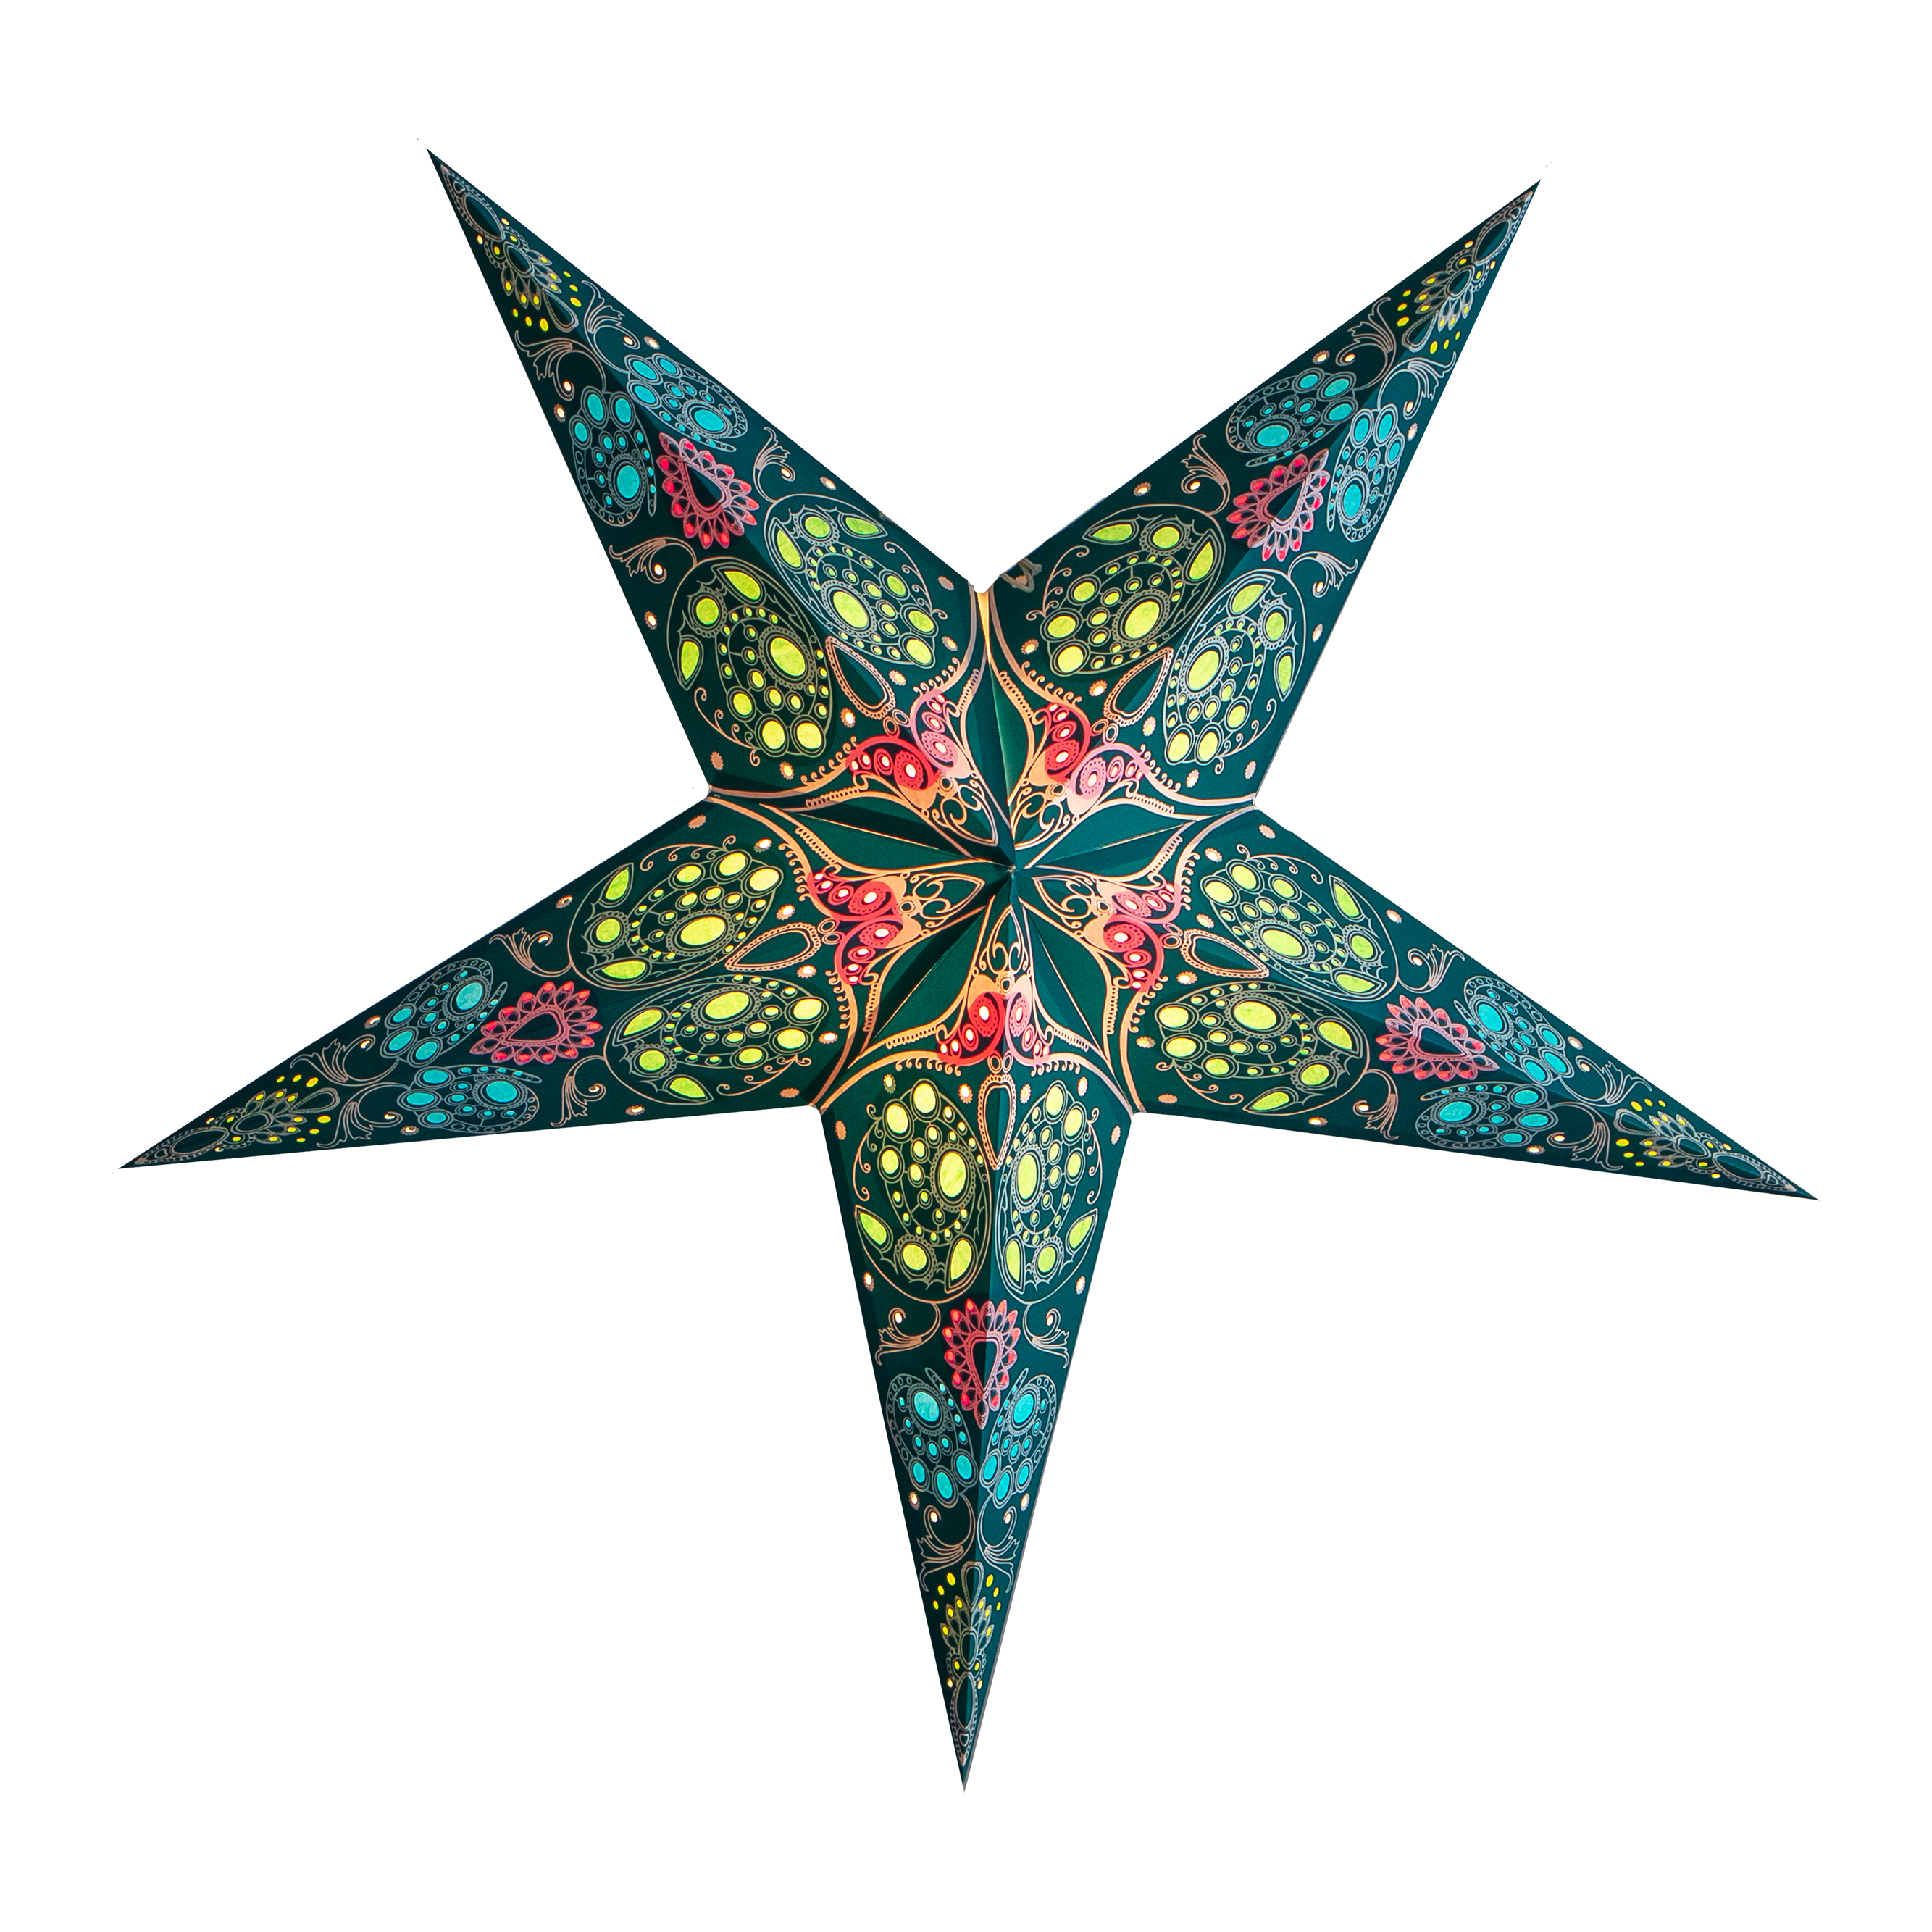 aquamarine paper star lantern